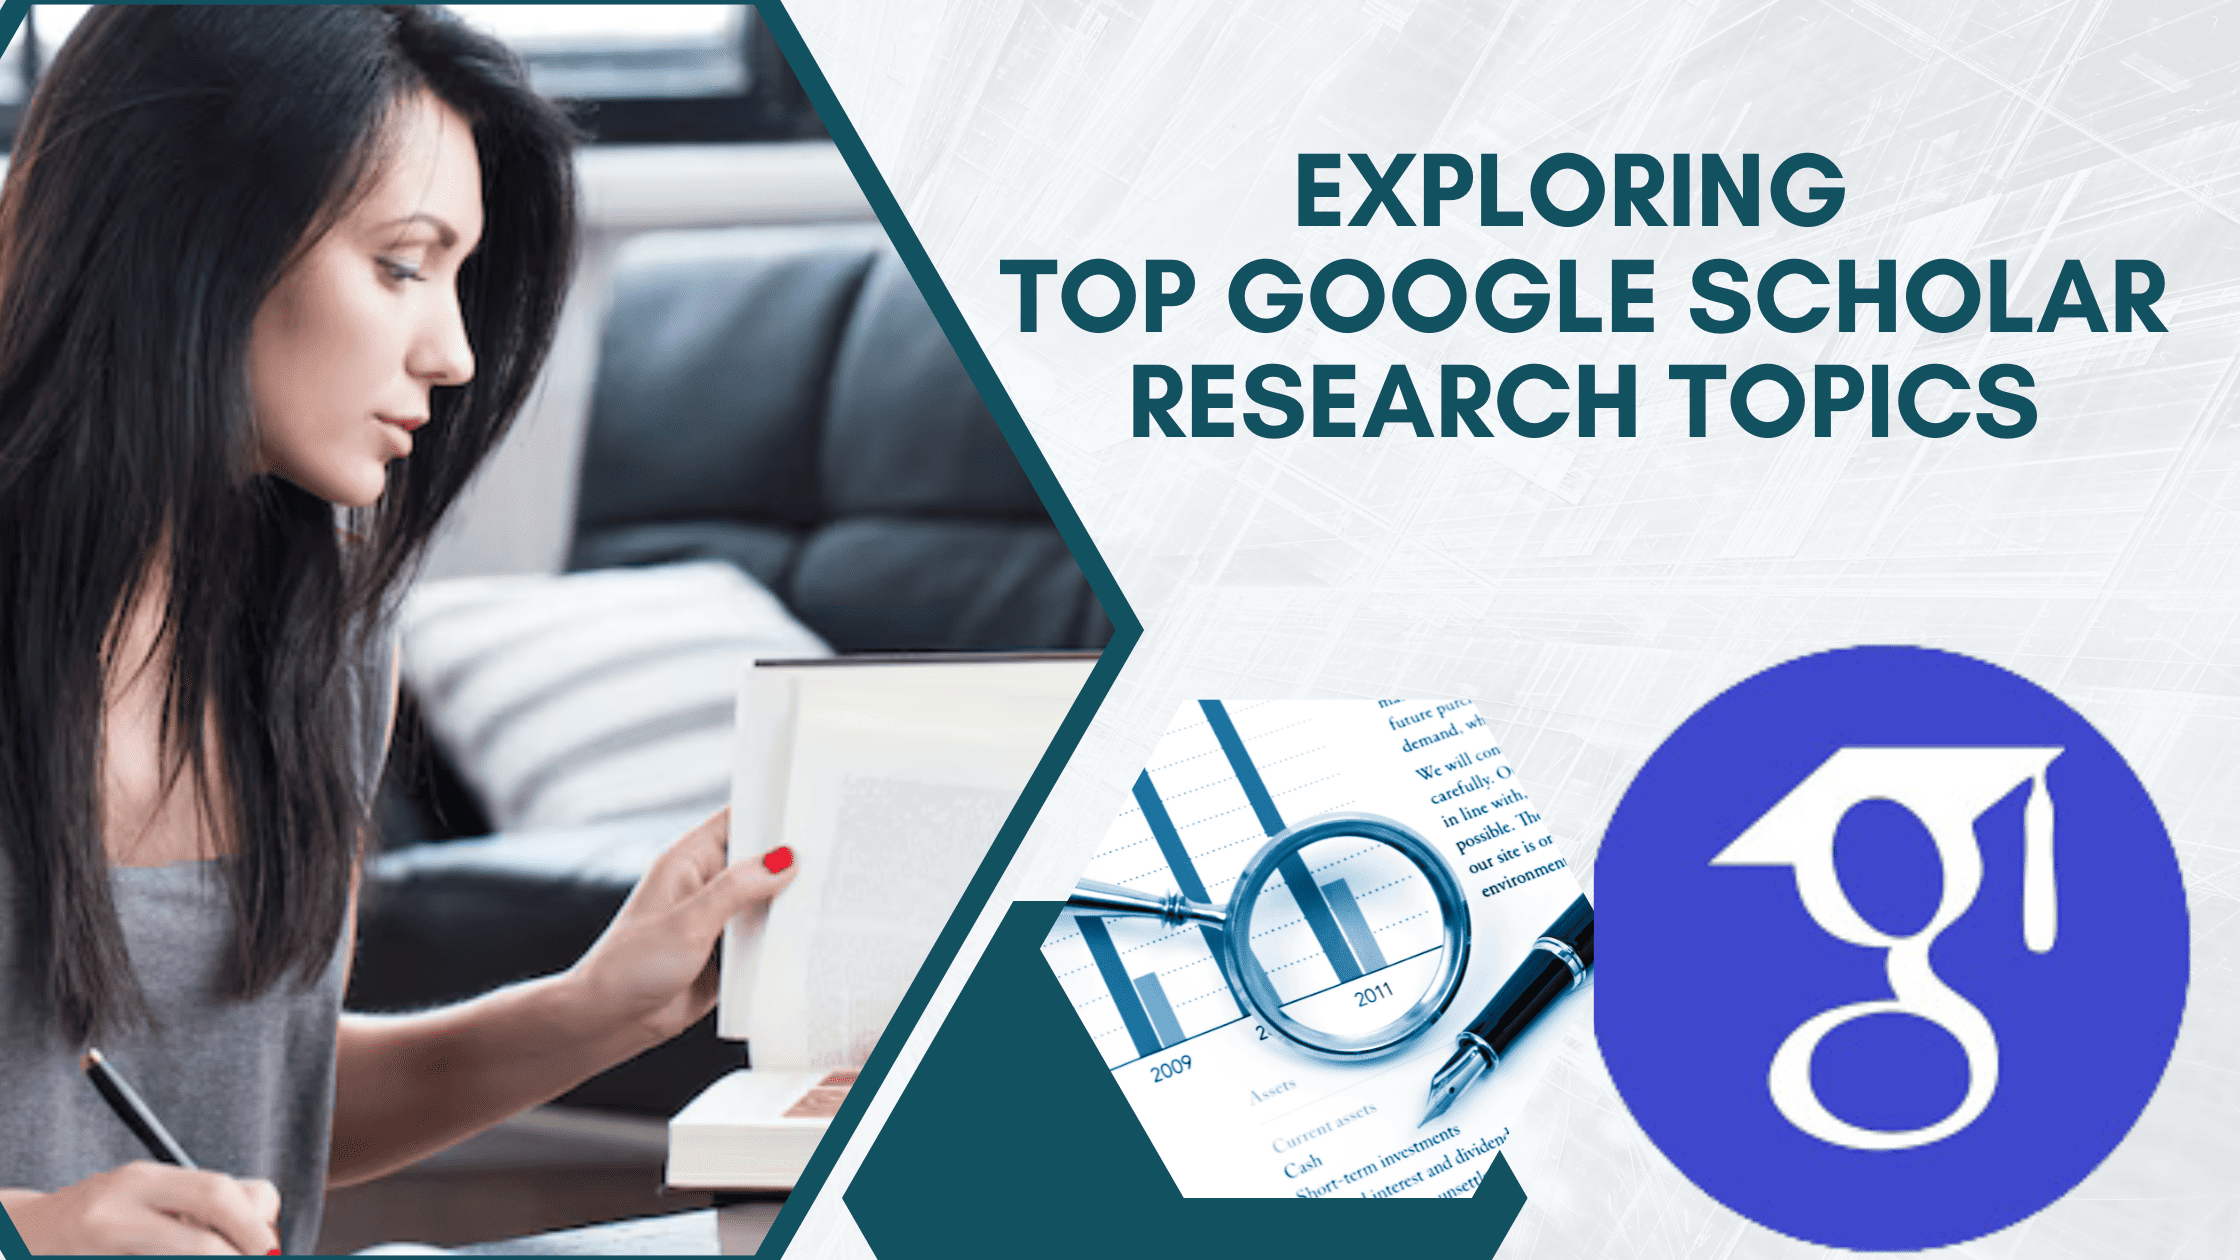 Google scholar research topics